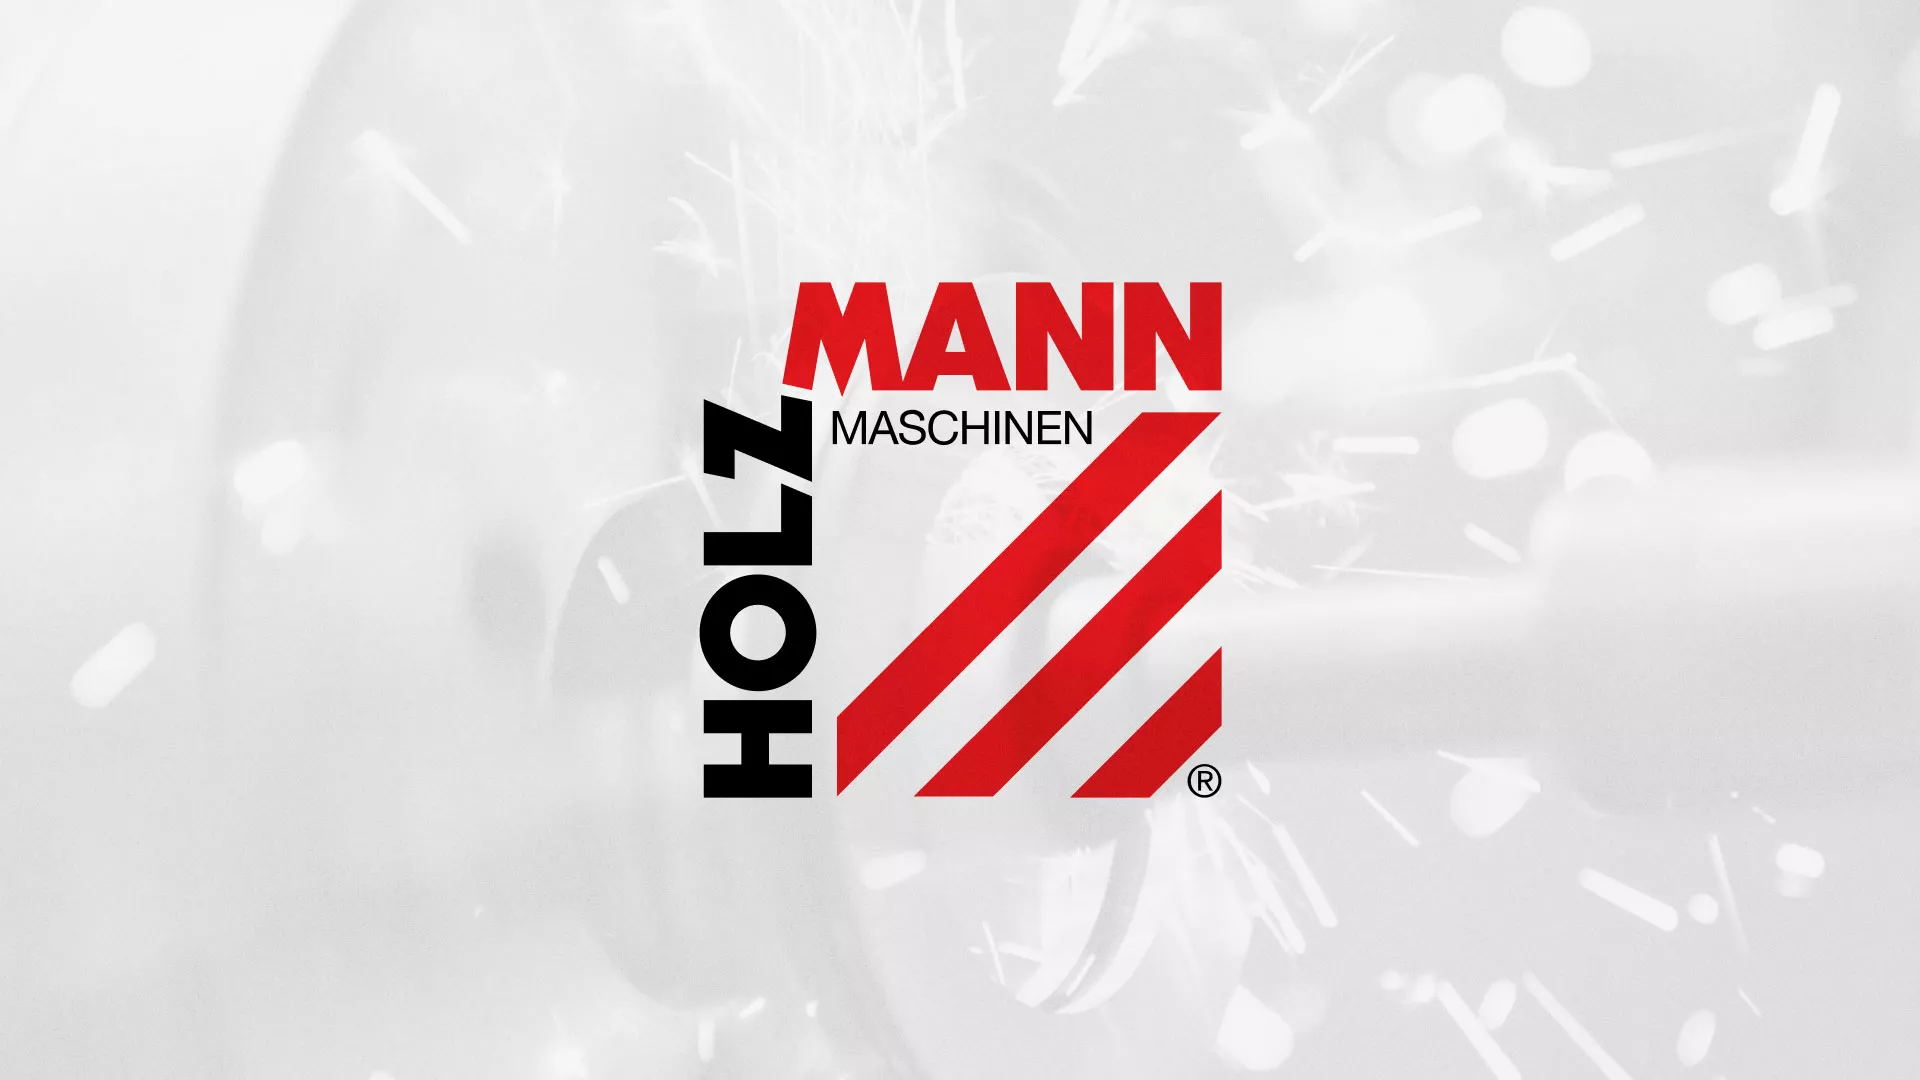 Создание сайта компании «HOLZMANN Maschinen GmbH» в Макушино